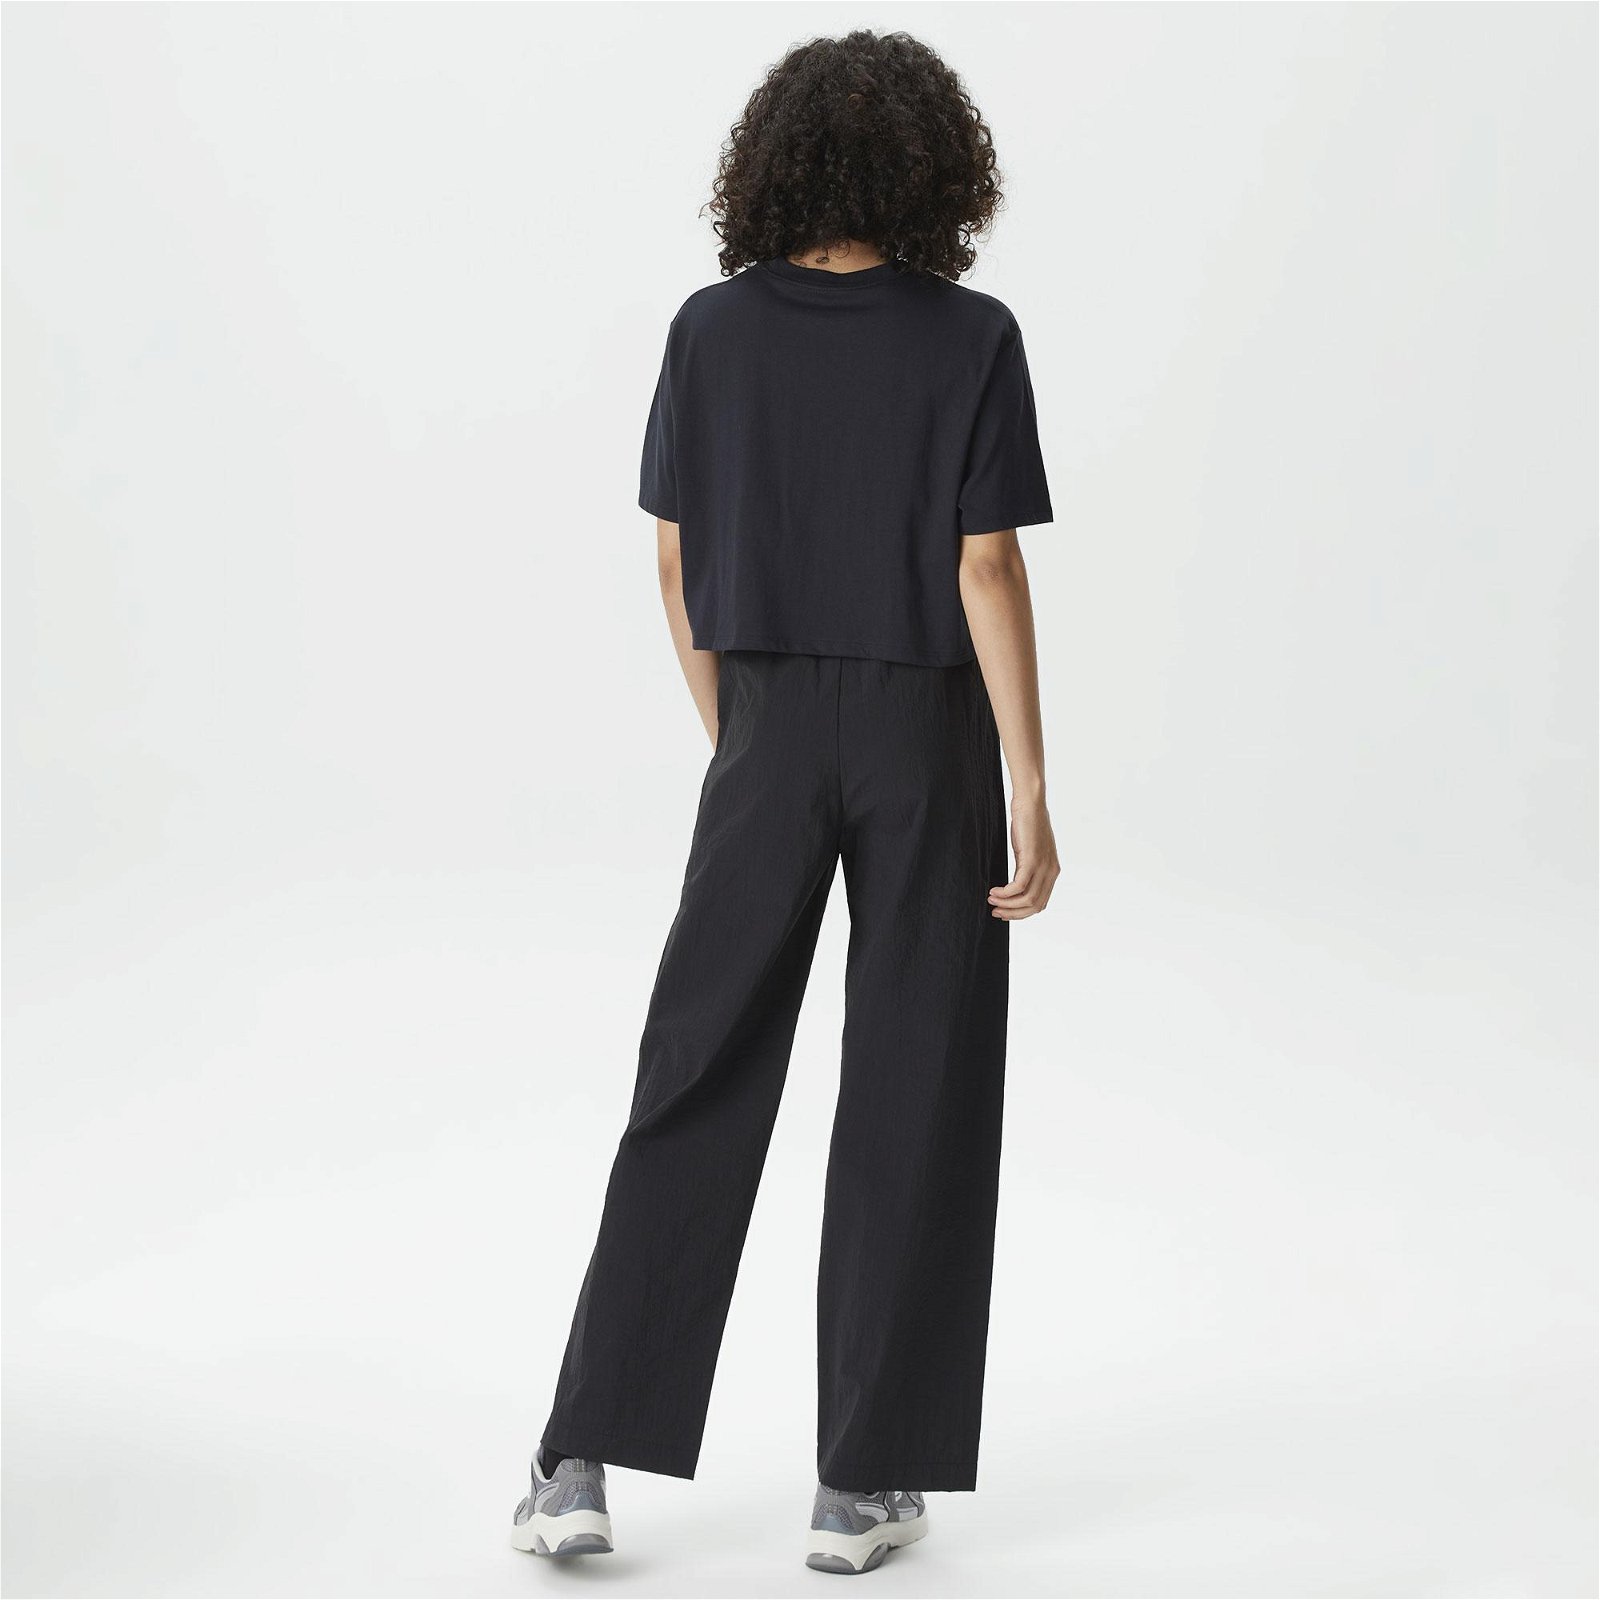 Skechers Micro Collection Kadın Siyah Pantolon